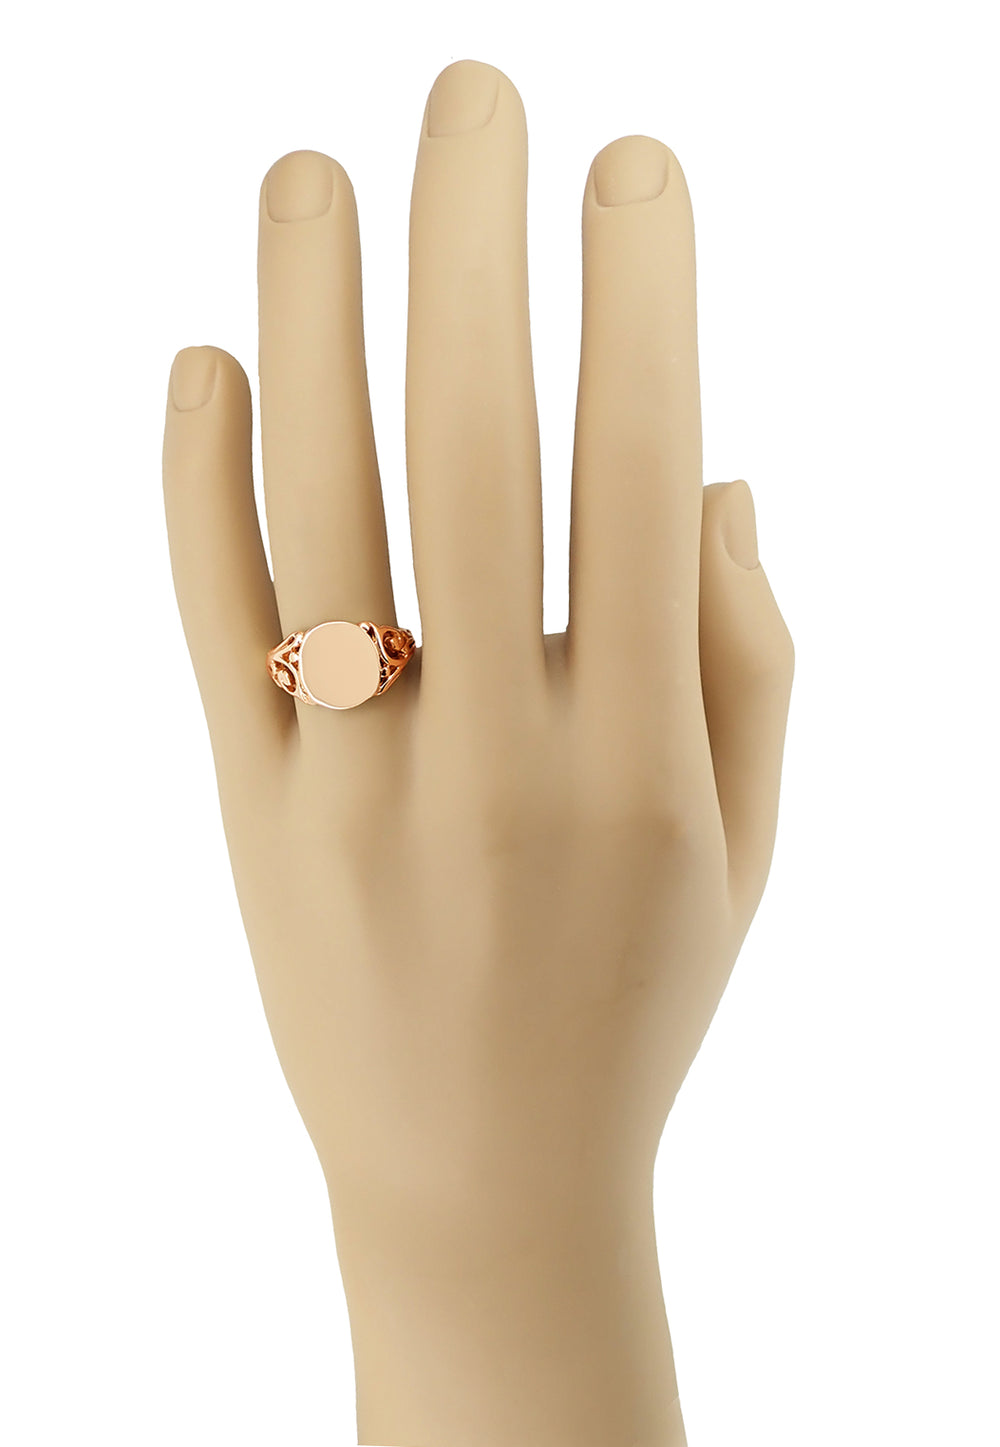 Antique Style Men's Victorian Filigree Signet Ring in 14 Karat Rose ( Pink ) Gold - Item: MR111R - Image: 2